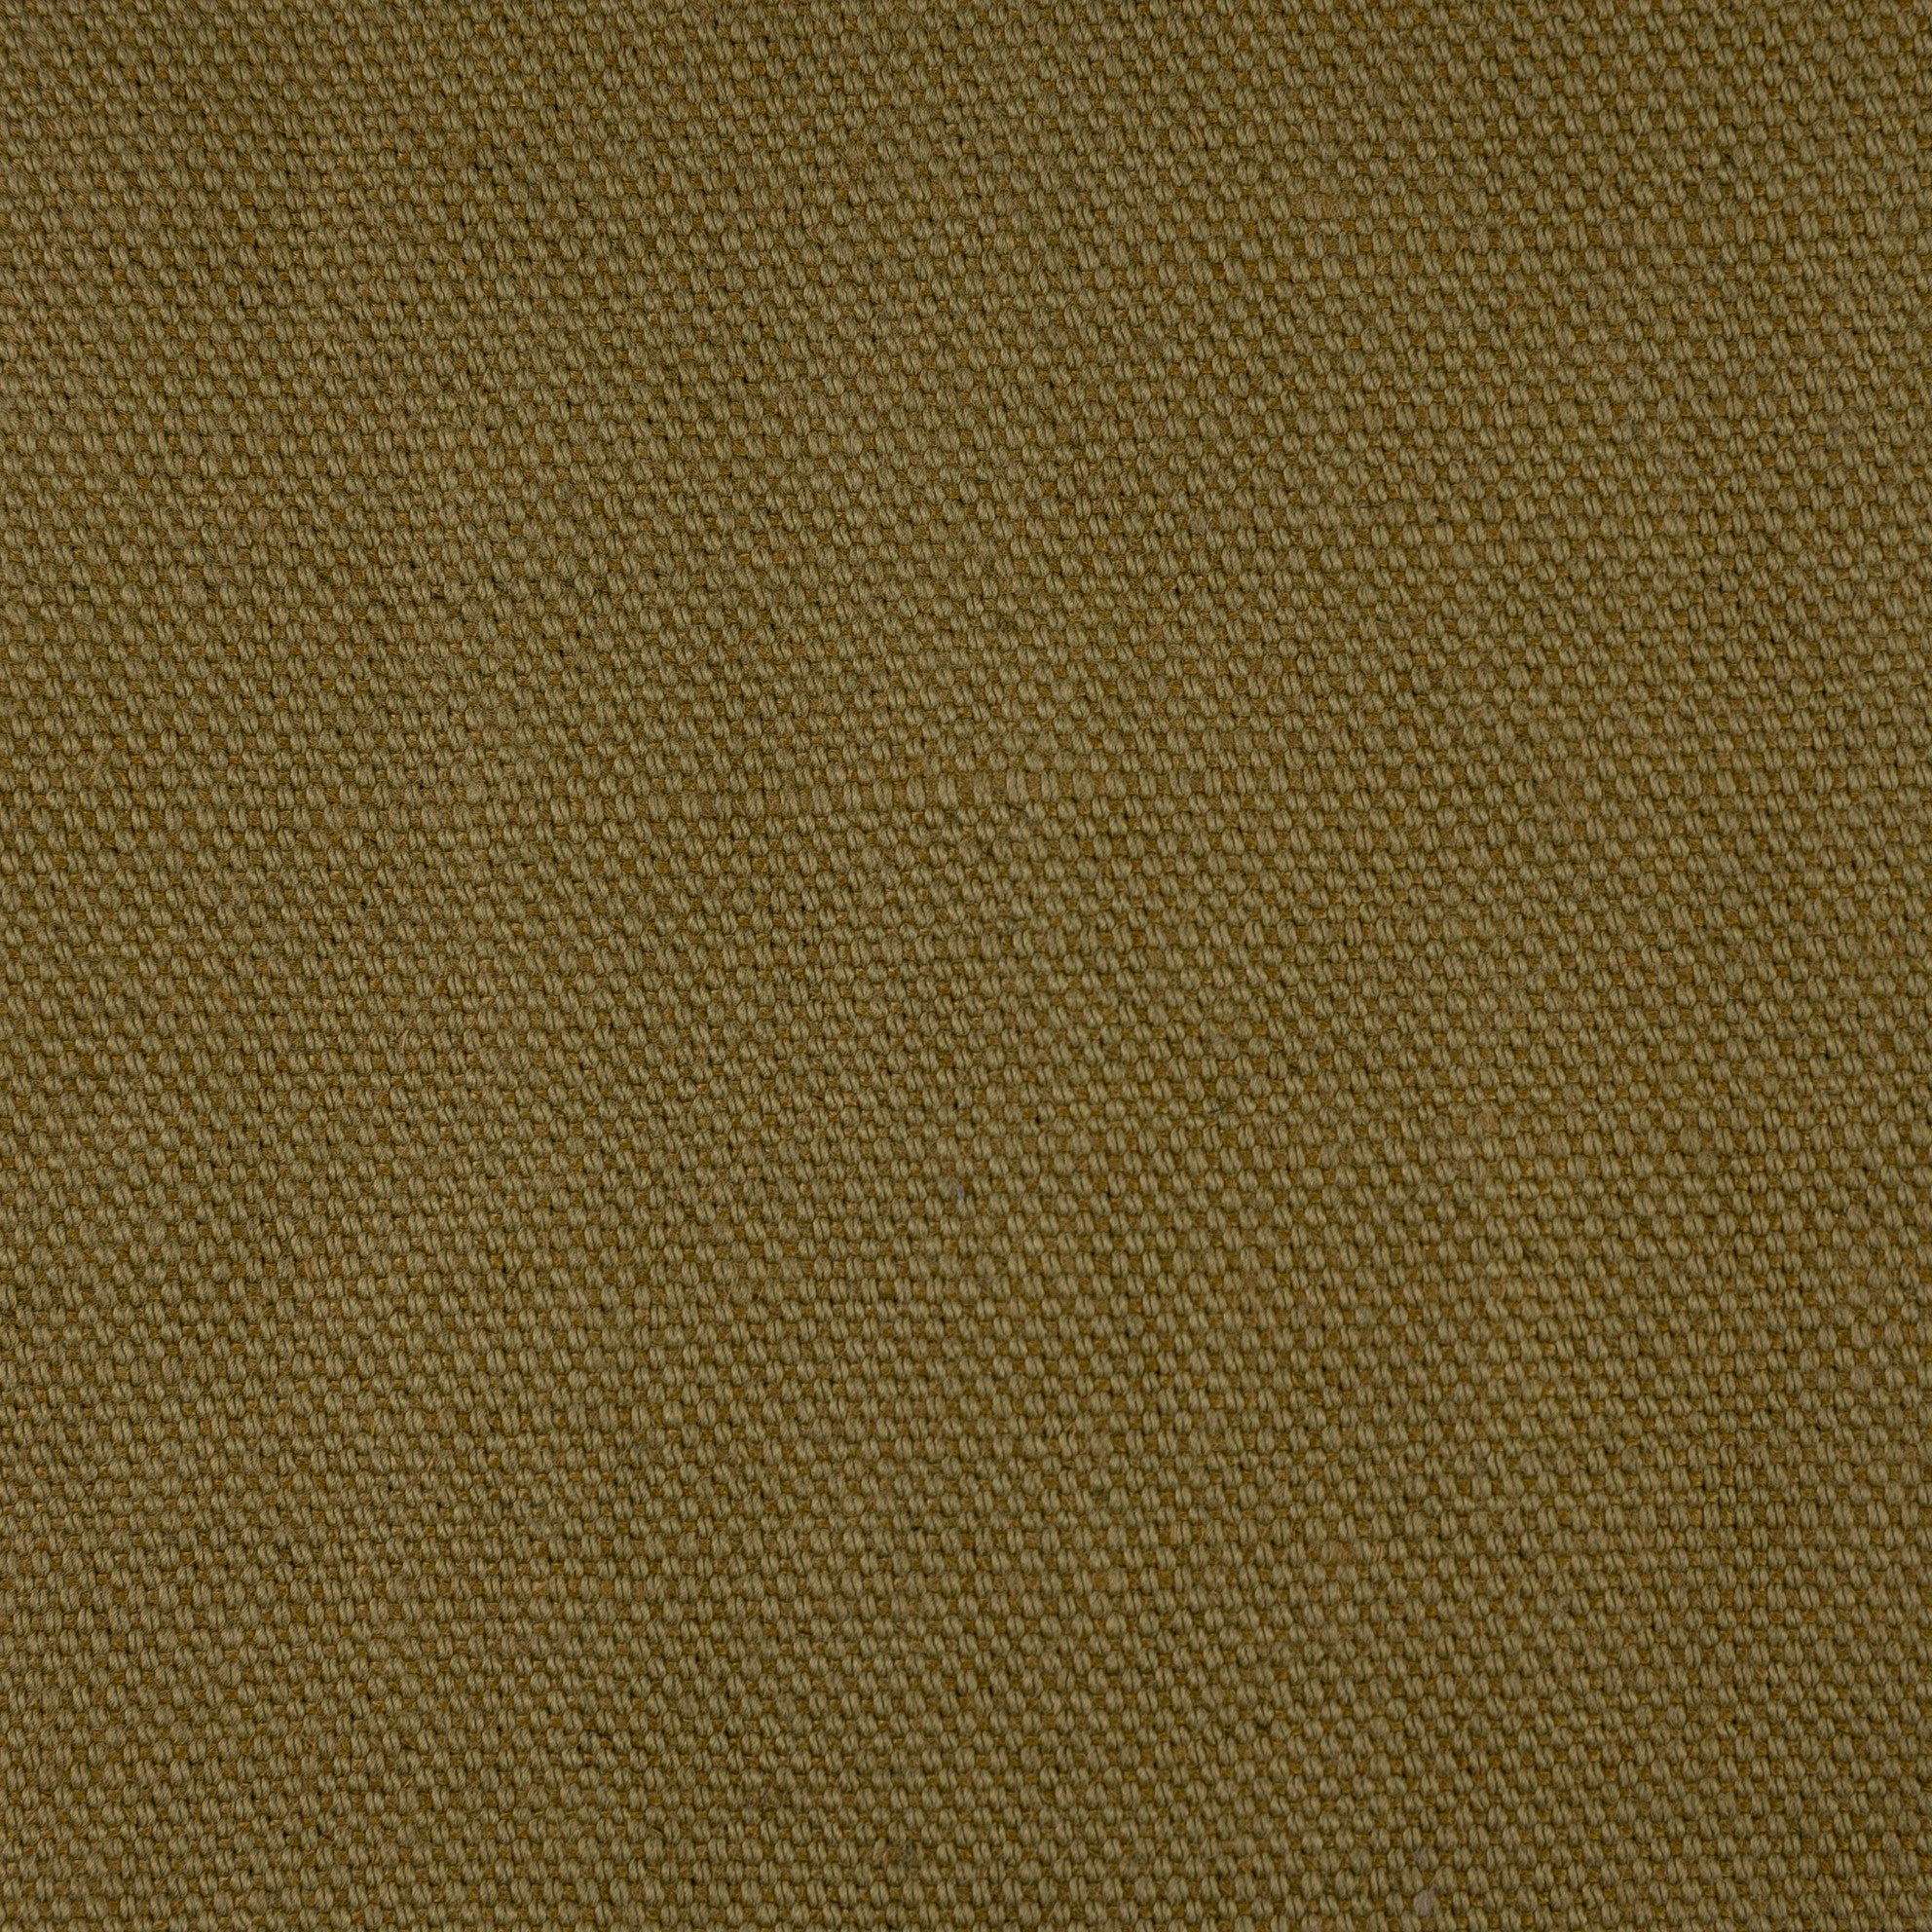 Woven Plain Fabric - Lynton 11/007 Barley Corn | Nicholas Engert Interiors